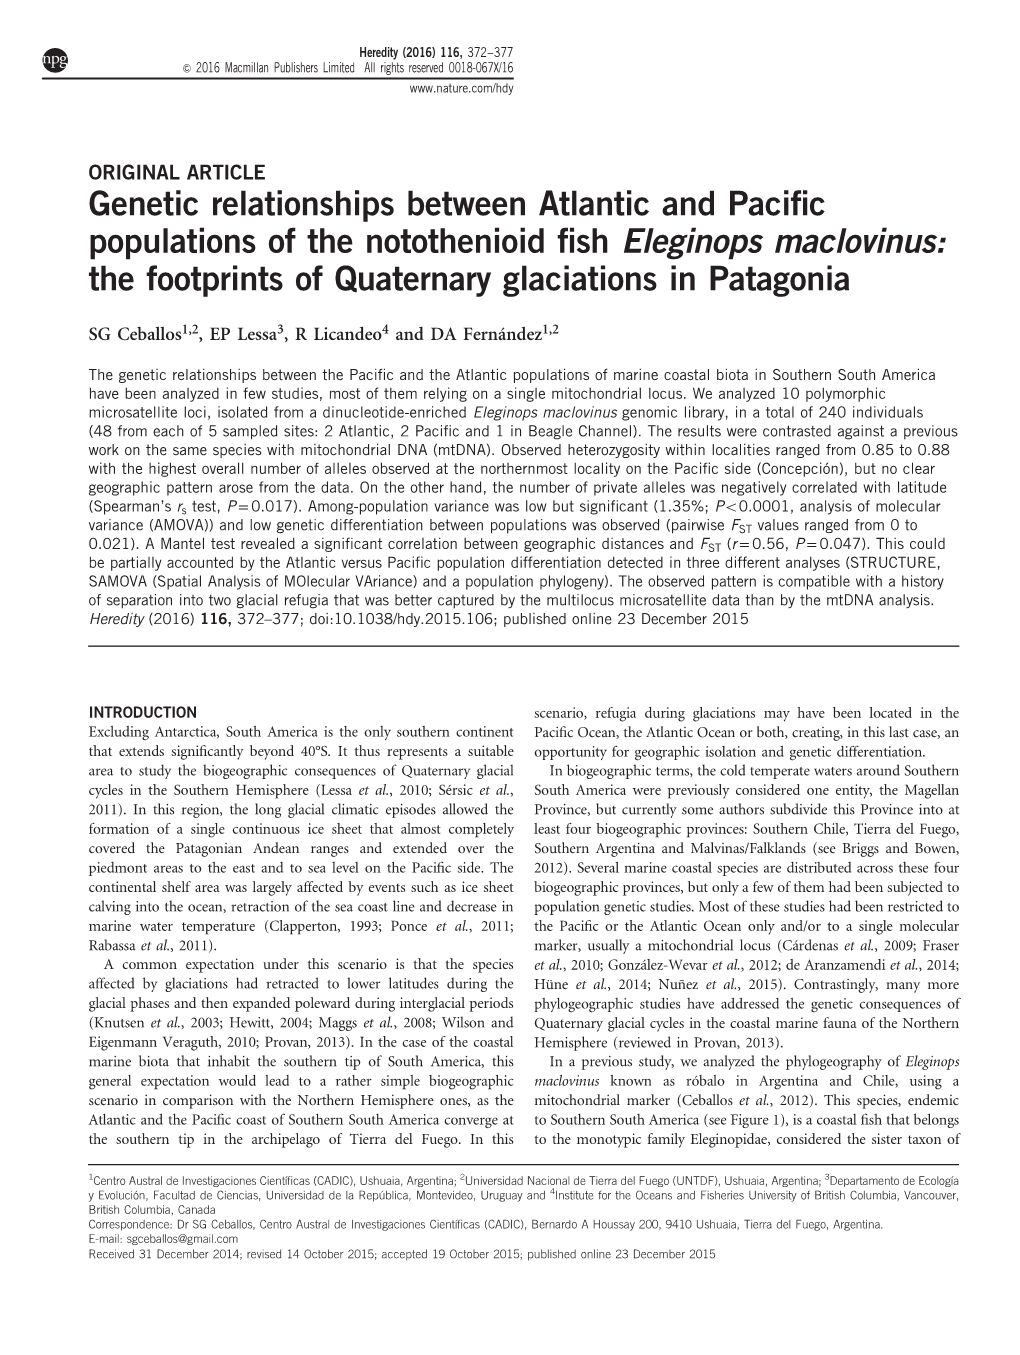 Genetic Relationships Between Atlantic and Pacific Populations Of